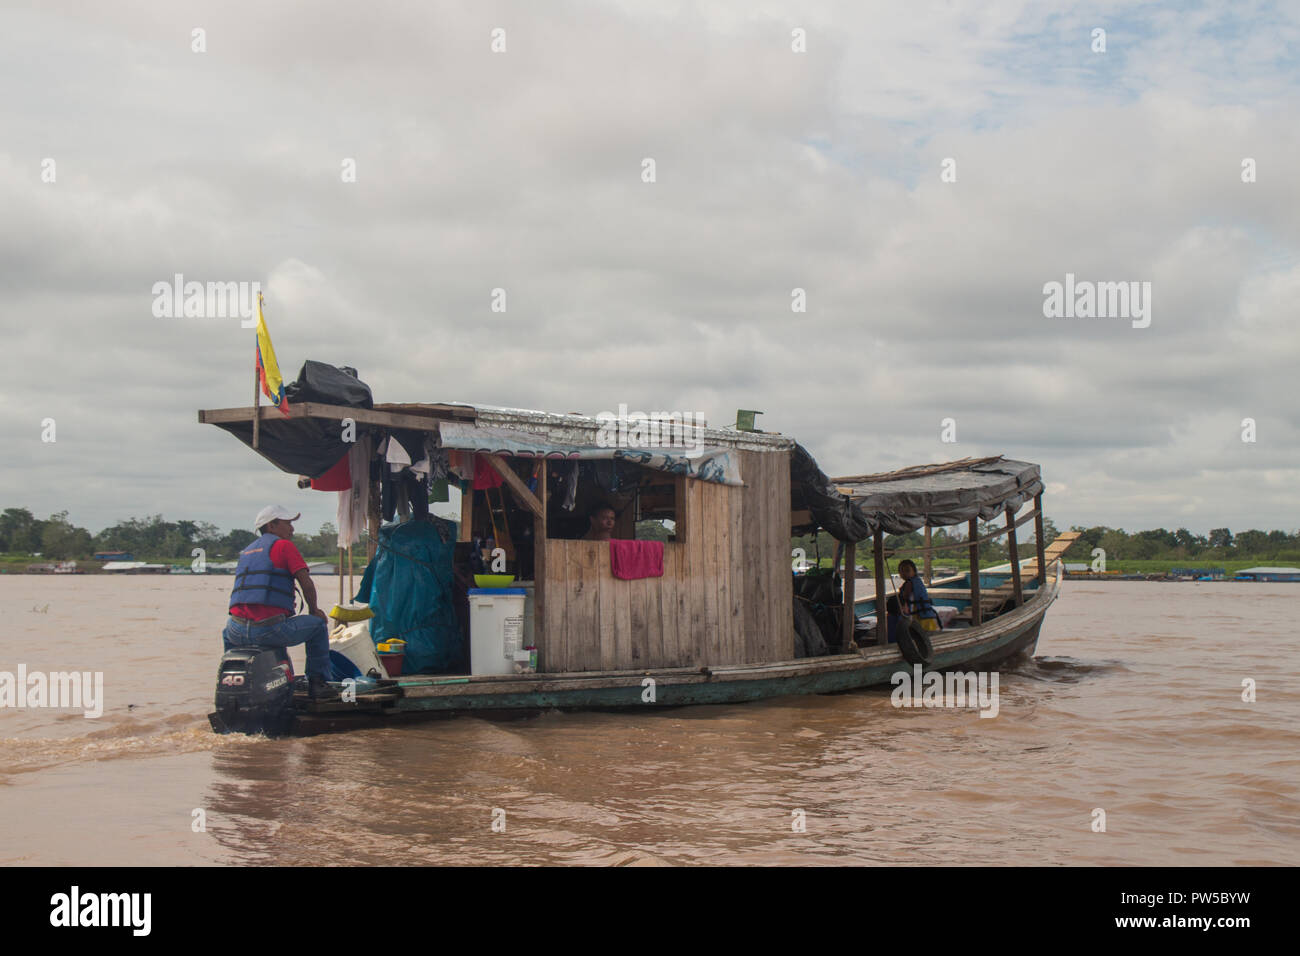 Amazon river, puerto nariño, Colombie Banque D'Images